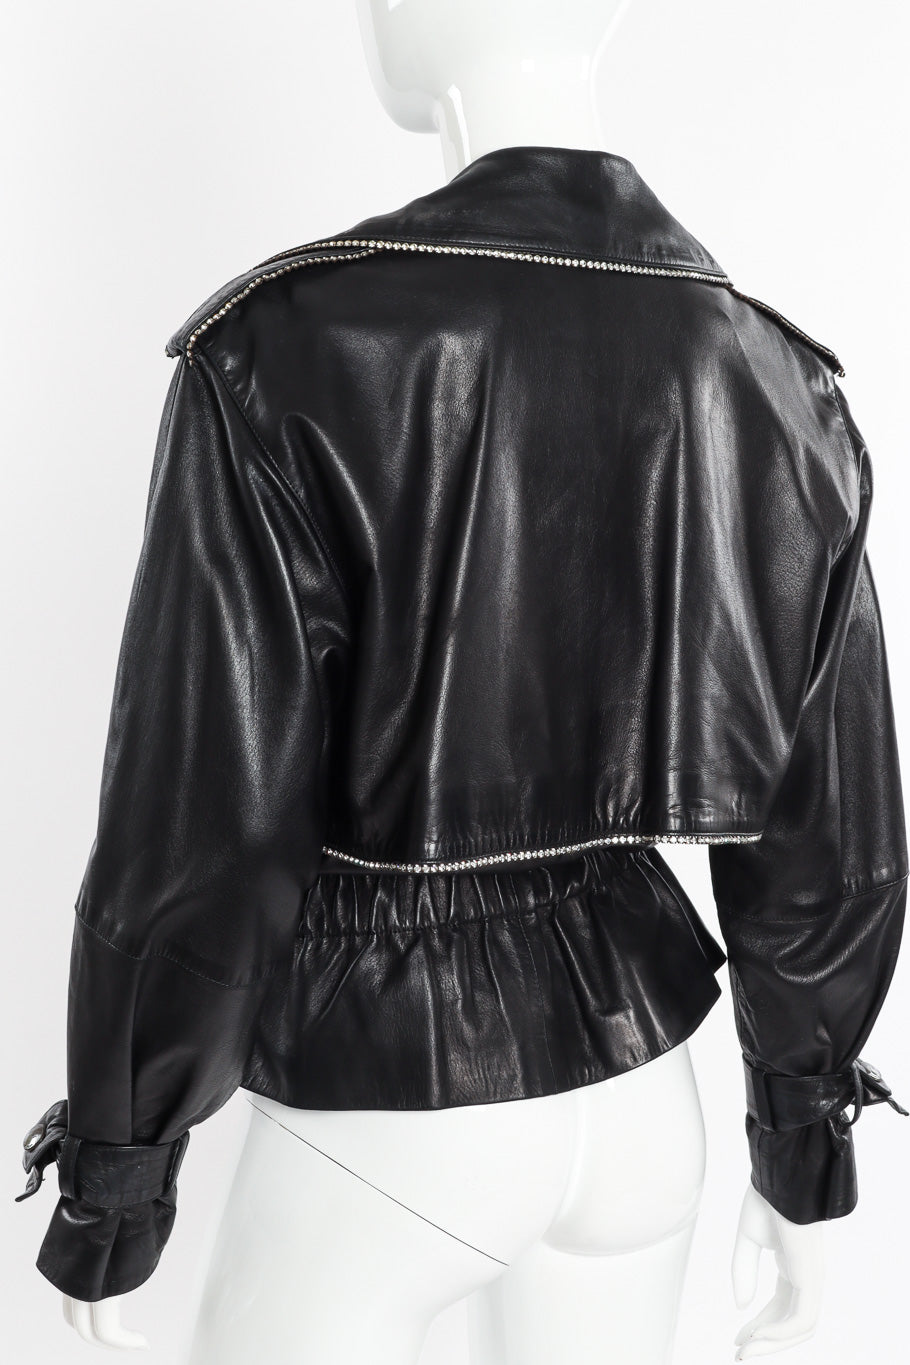 Vintage Charles Jourdan Leather Rhinestone Jacket back on mannequin closeup @recessla